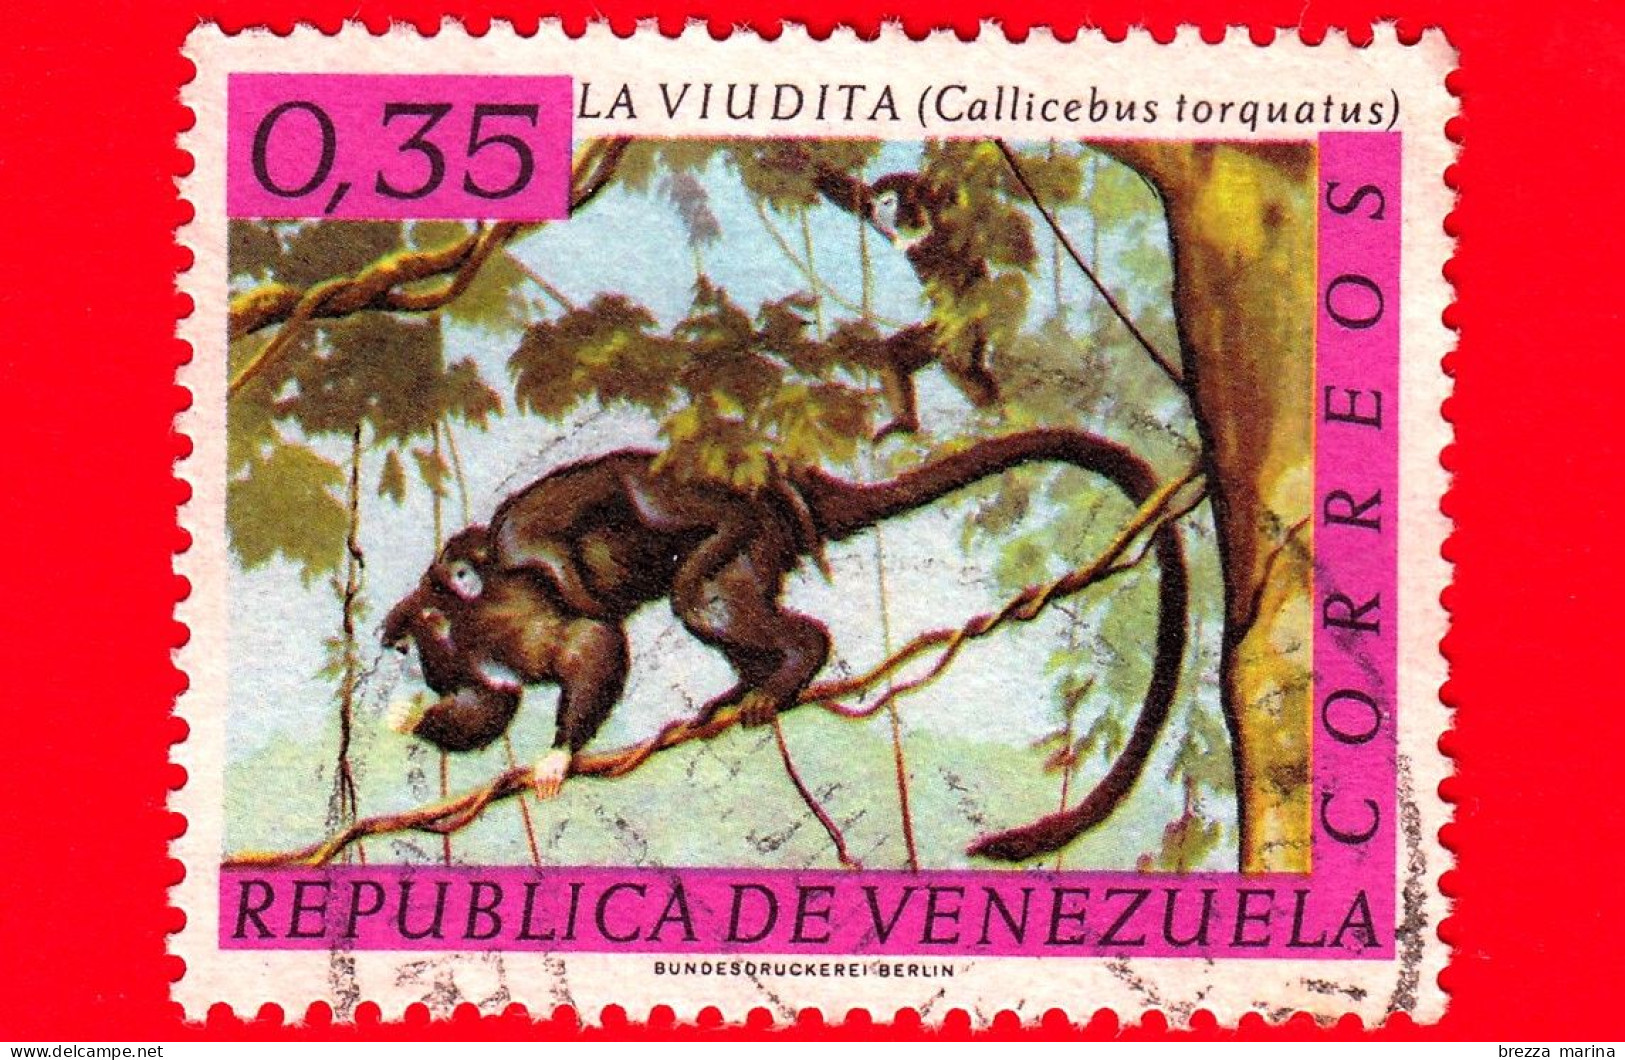 VENEZUELA - Usato - 1963 Fauna - Cincia Dal Collare Bianco (Calicebus Torquatus) - 0.35 - Venezuela